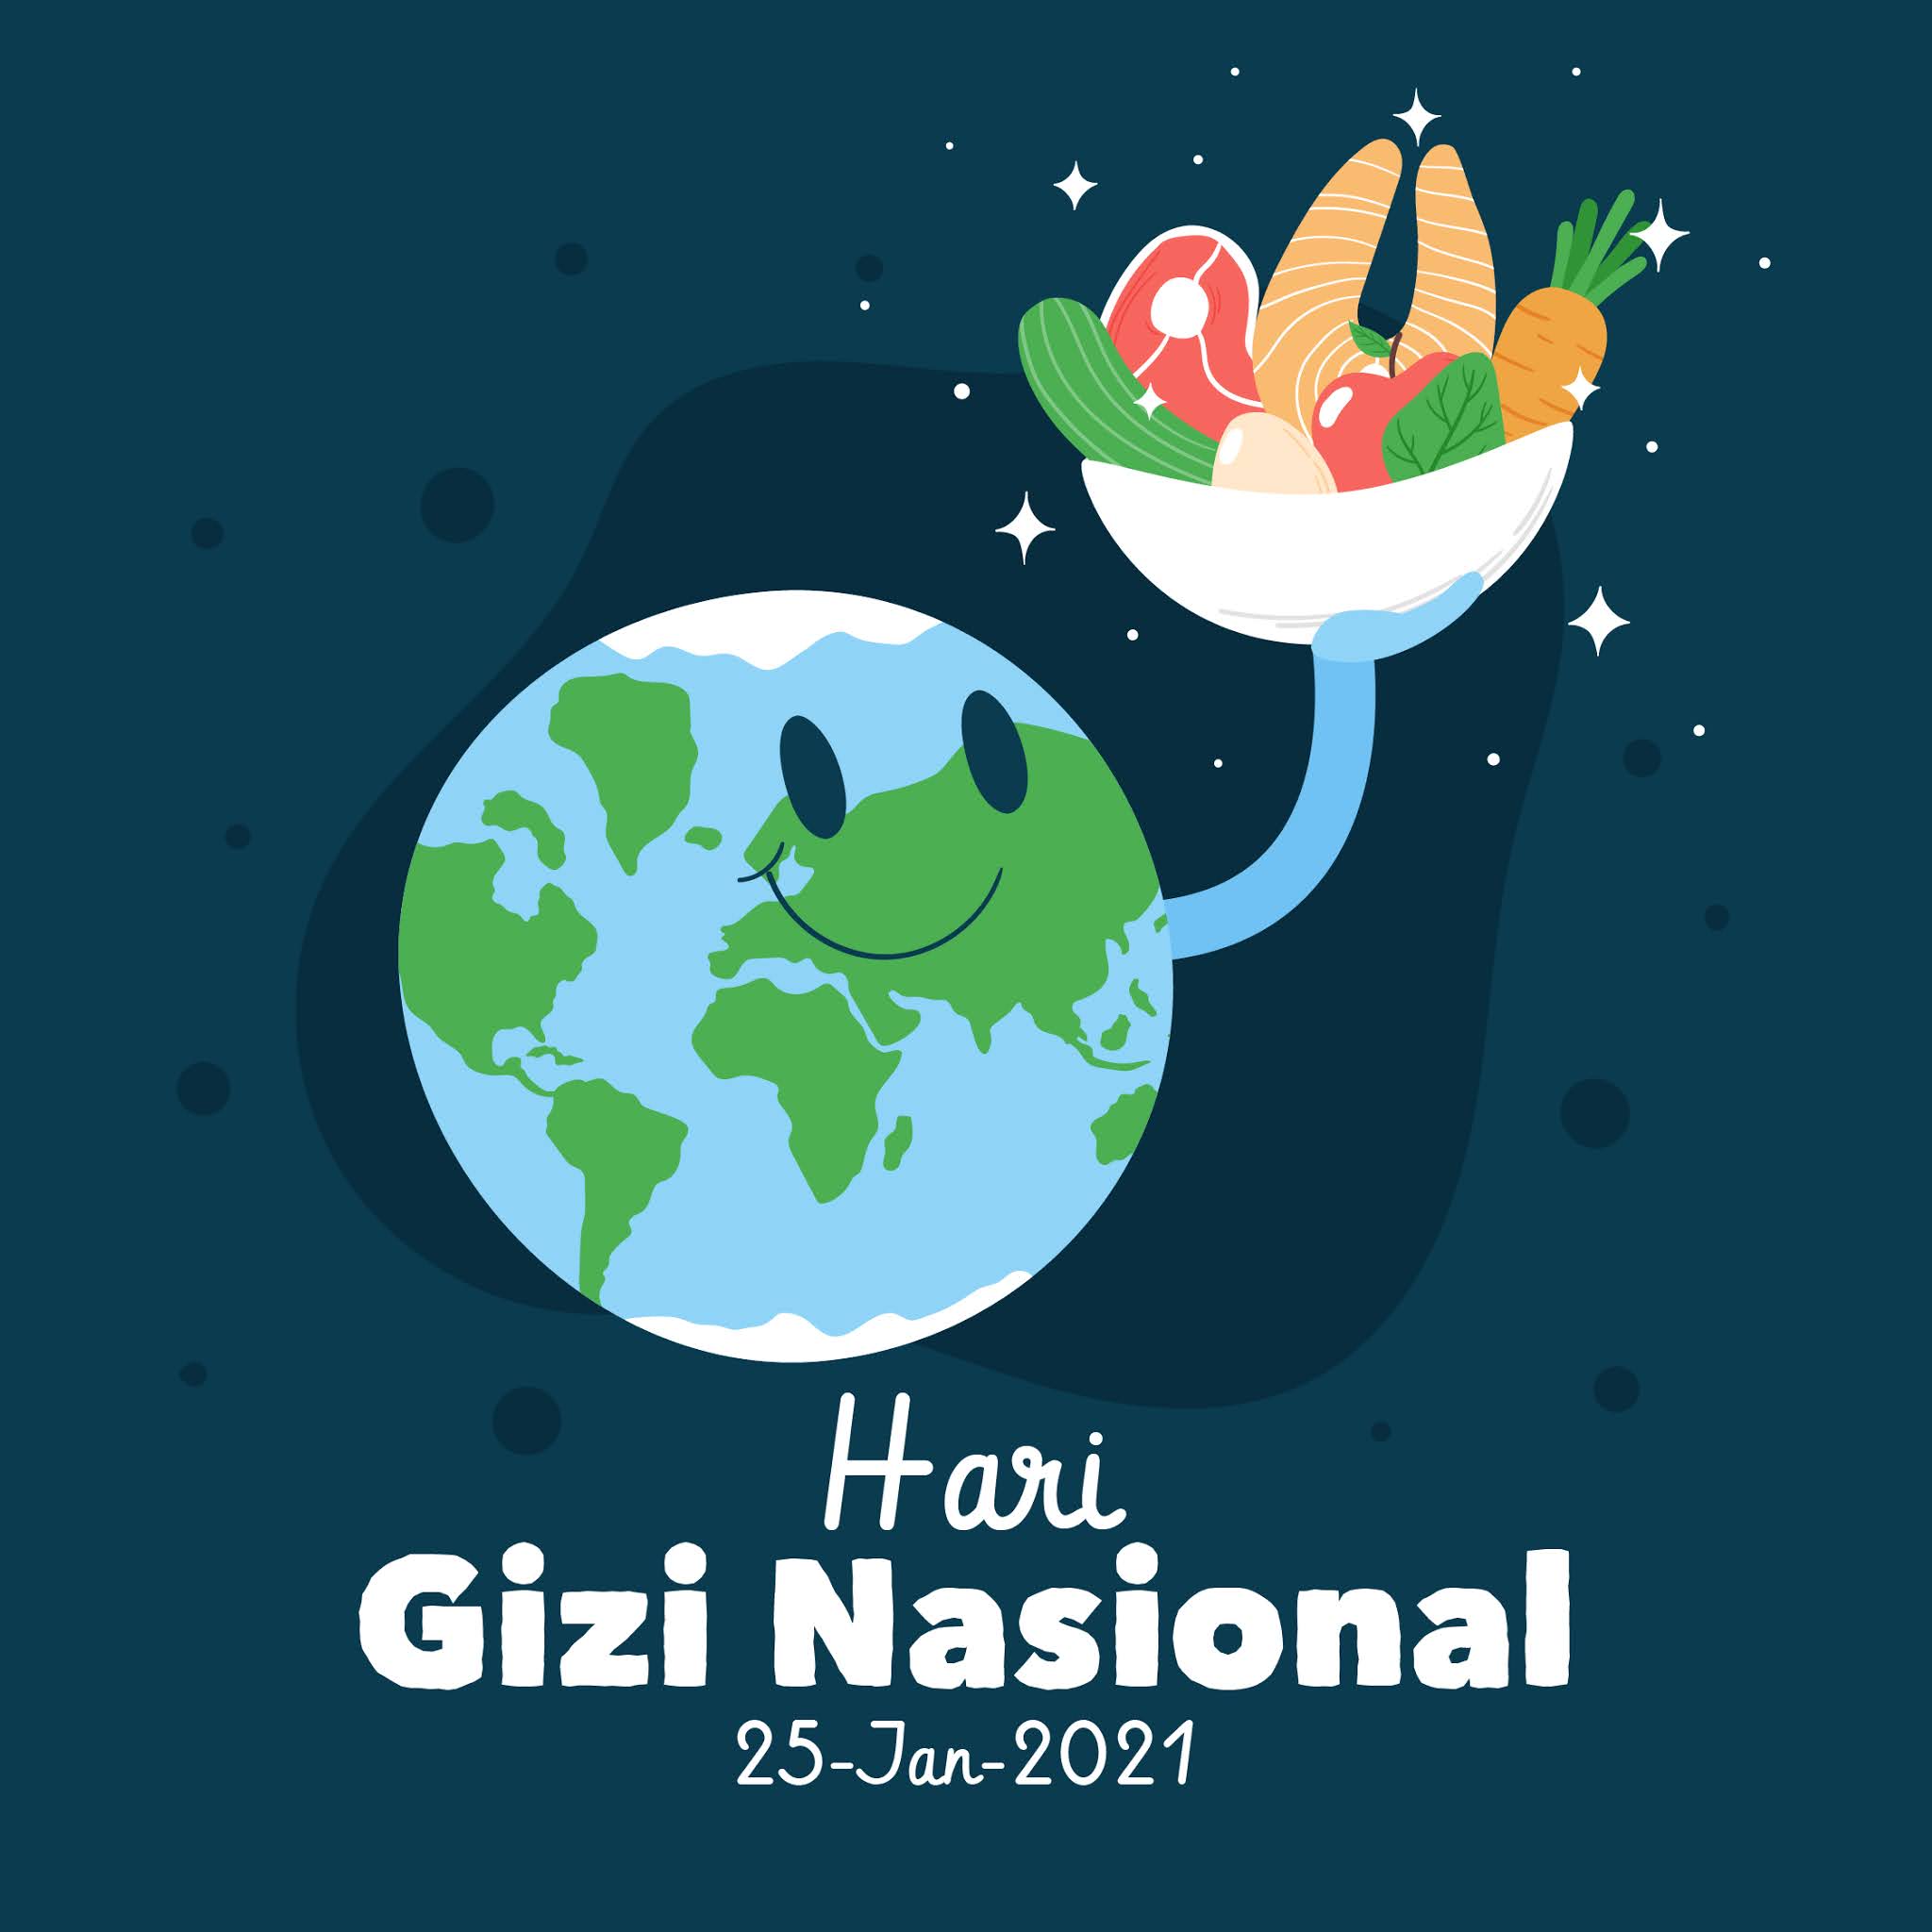 Kumpulan Gambar Desain Template Ucapan Selamat Hari Gizi Nasional